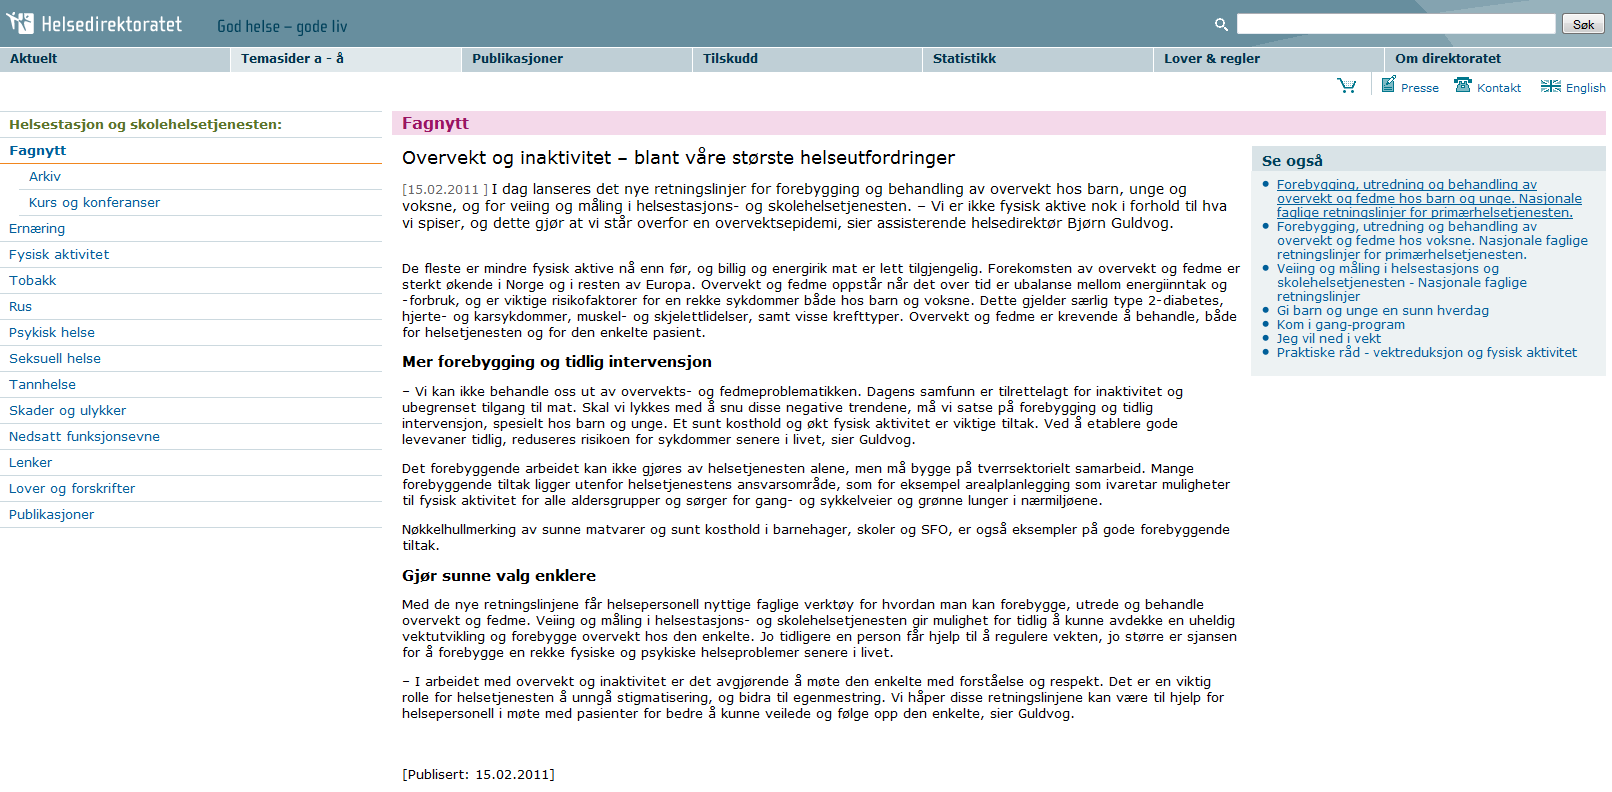 Førebyggande folkehelseperspektiv 15. Februar 2011 http://www.helsedirektoratet.